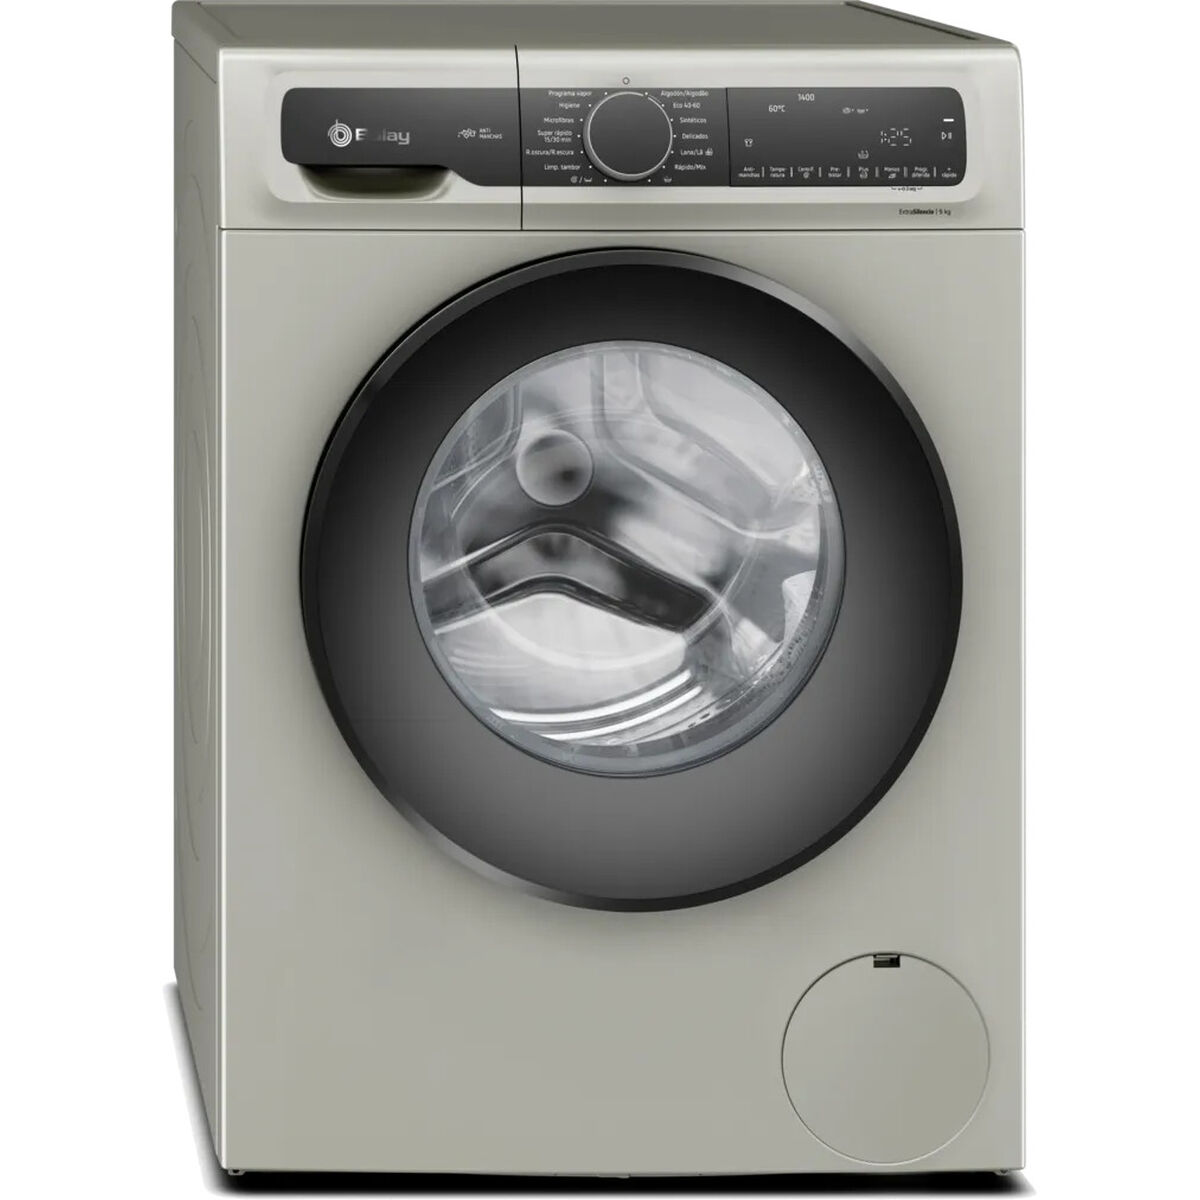 Washing machine Balay 60 cm 1400 rpm 9 kg